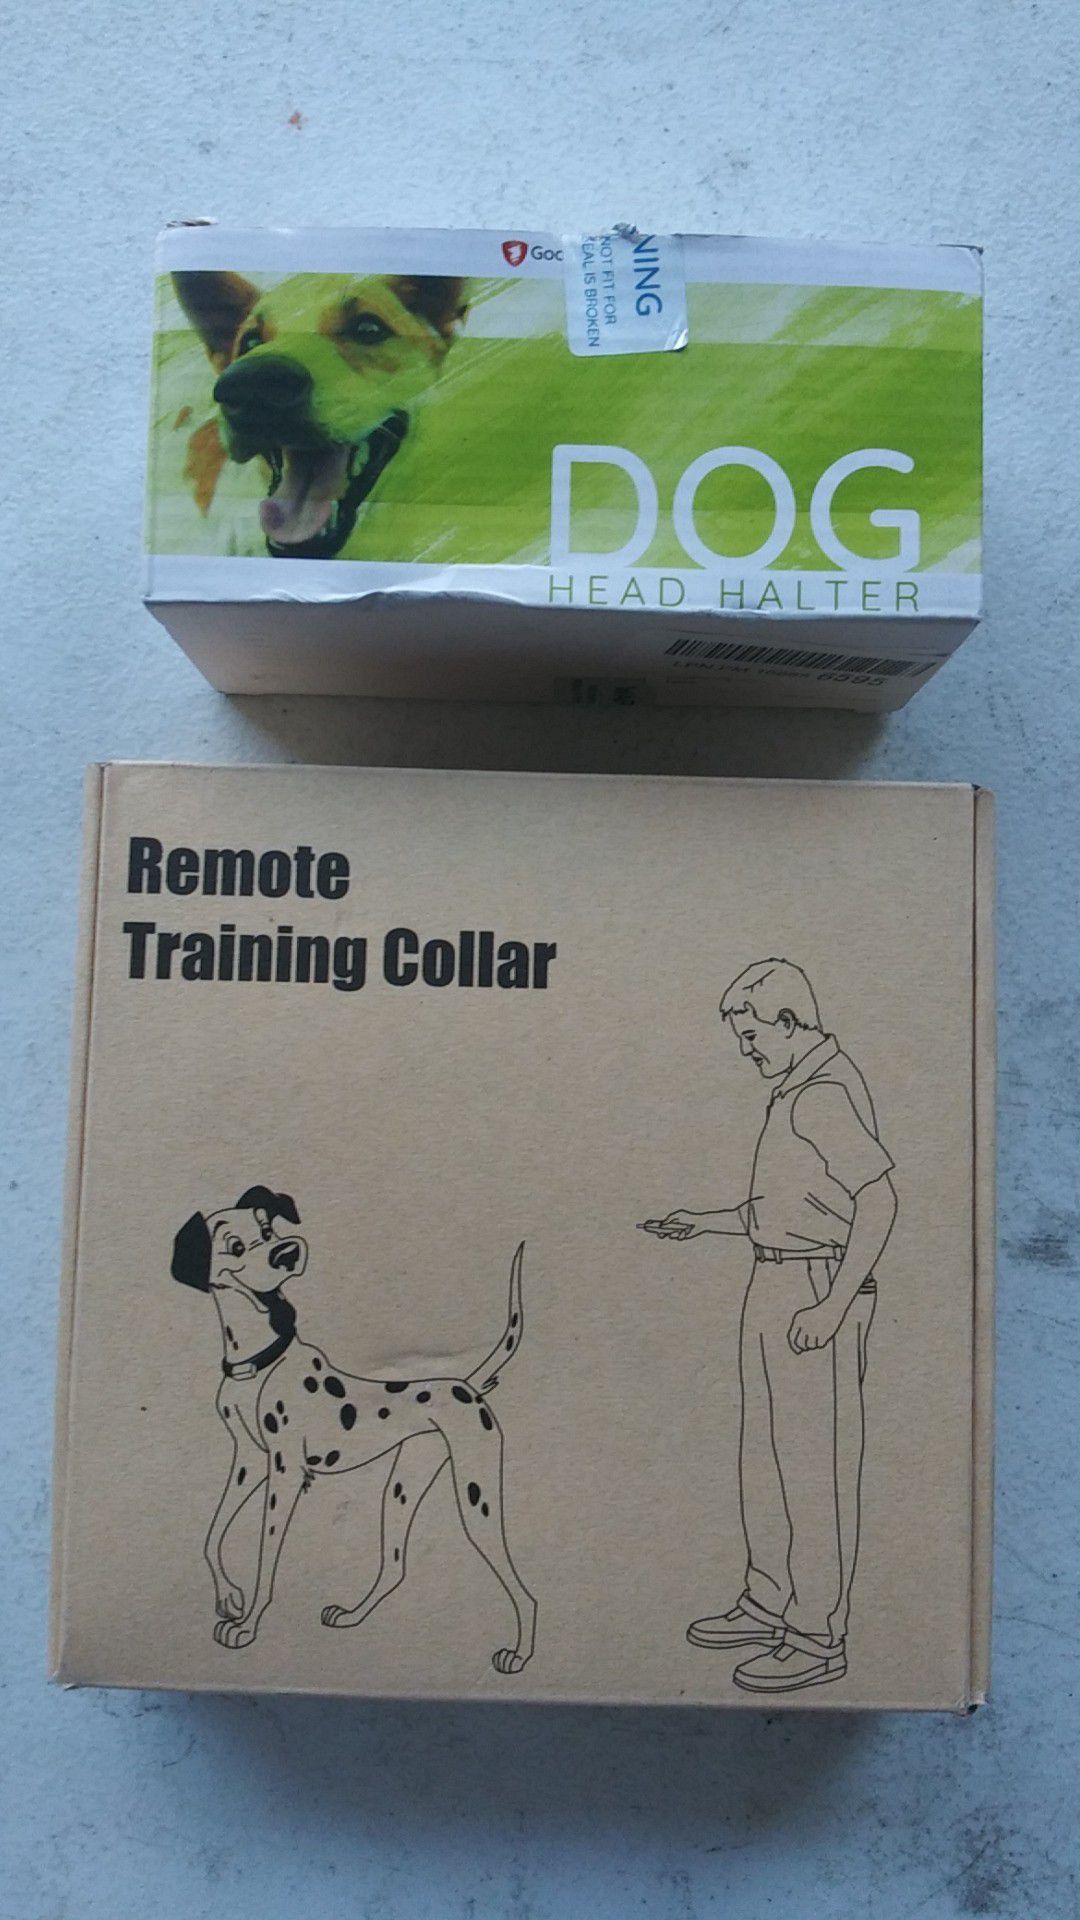 Remote training collar and dog head halter